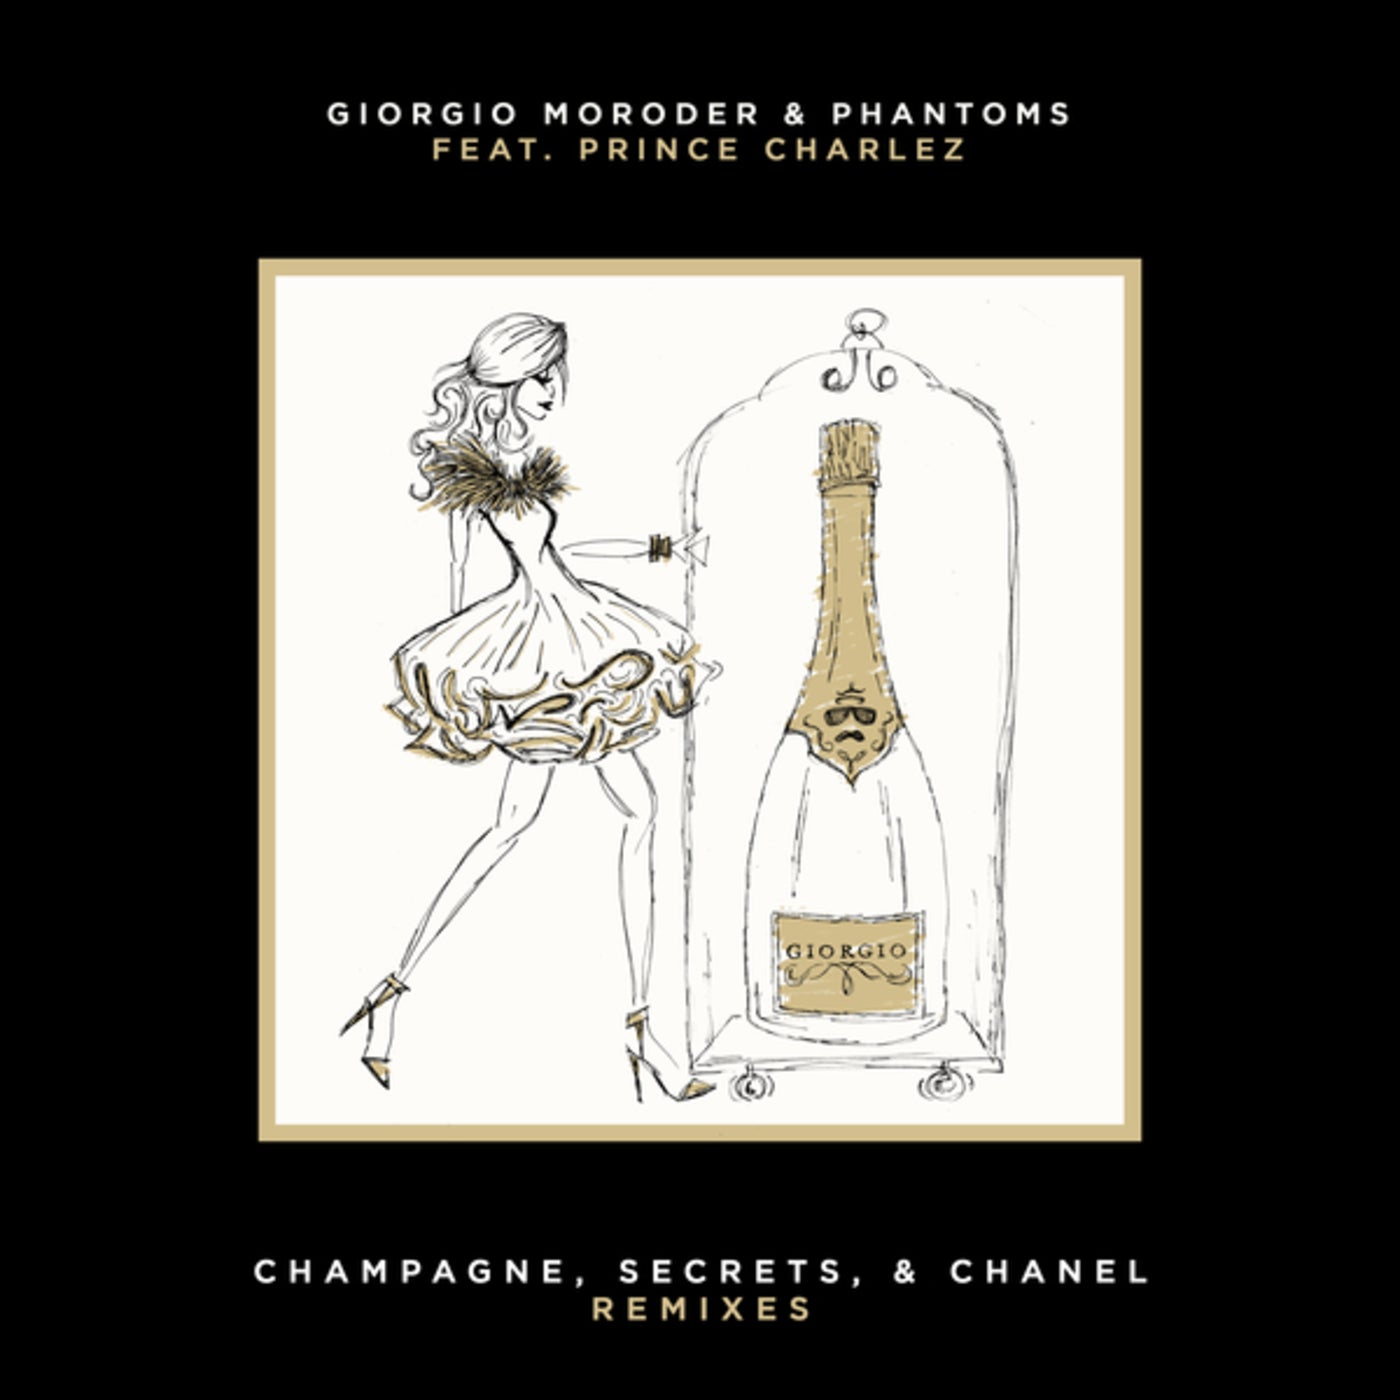 Champagne, Secrets, & Chanel